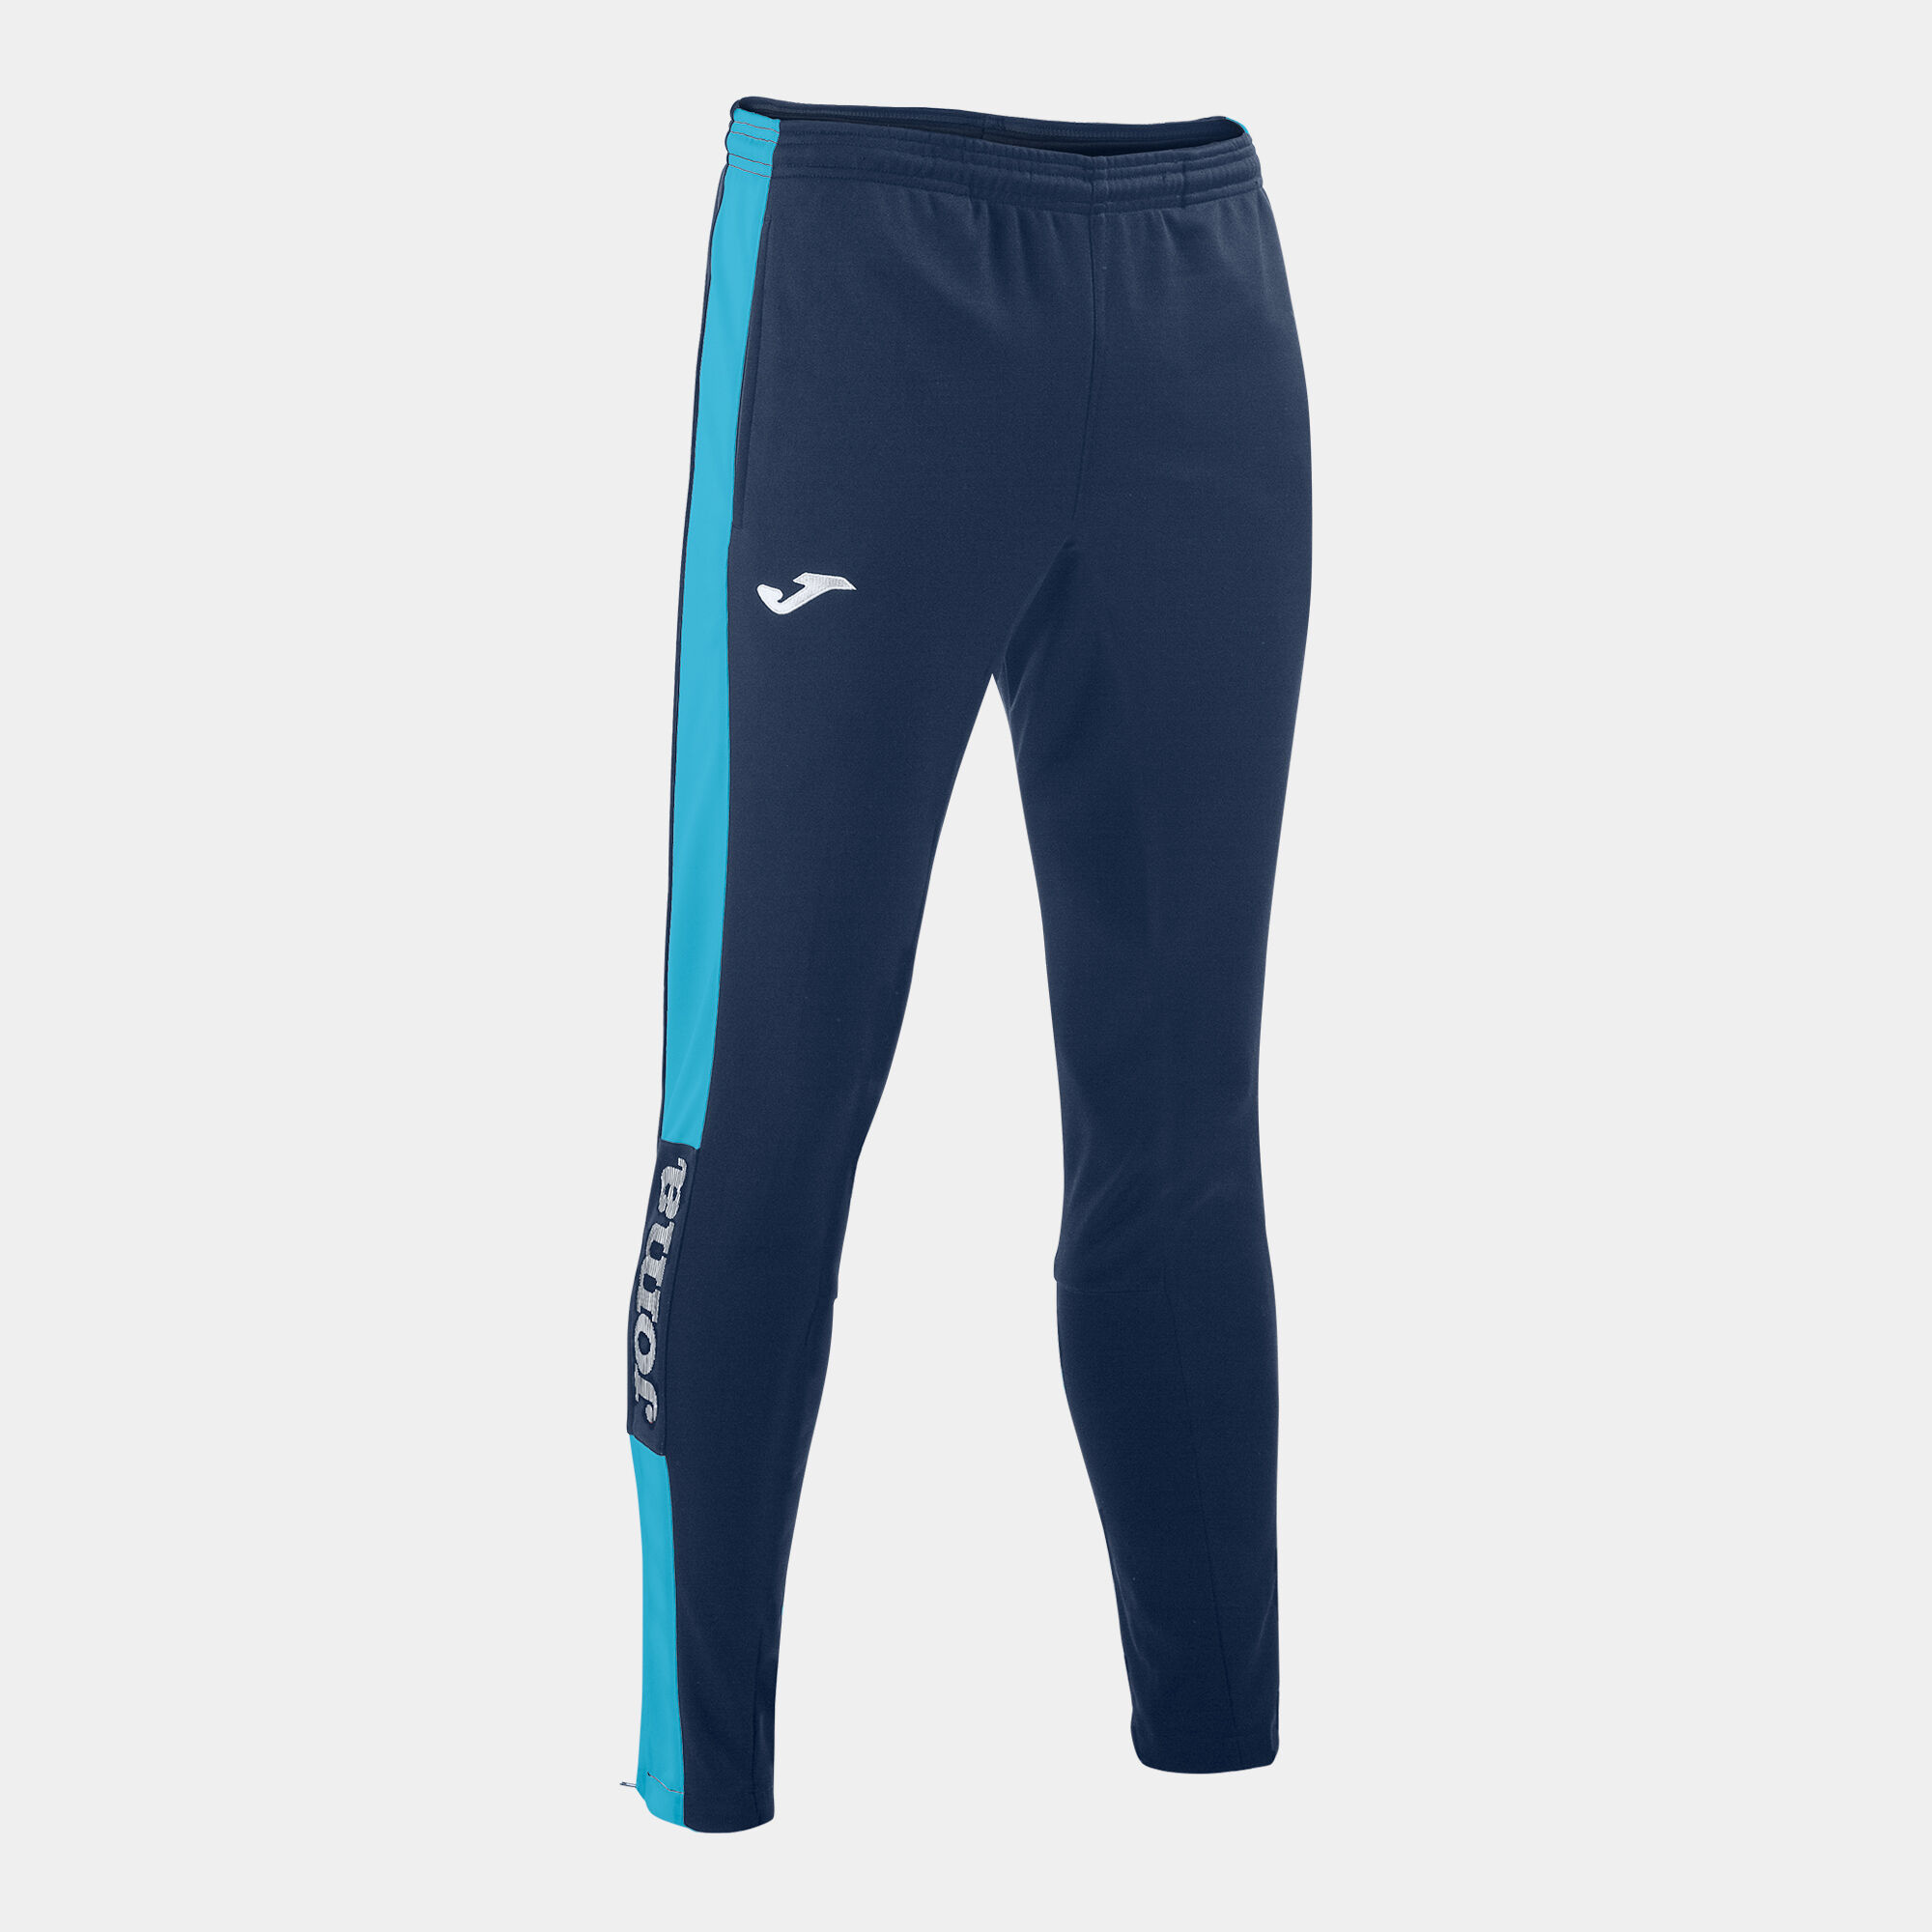 Longs pants man Championship IV navy blue fluorescent turquoise